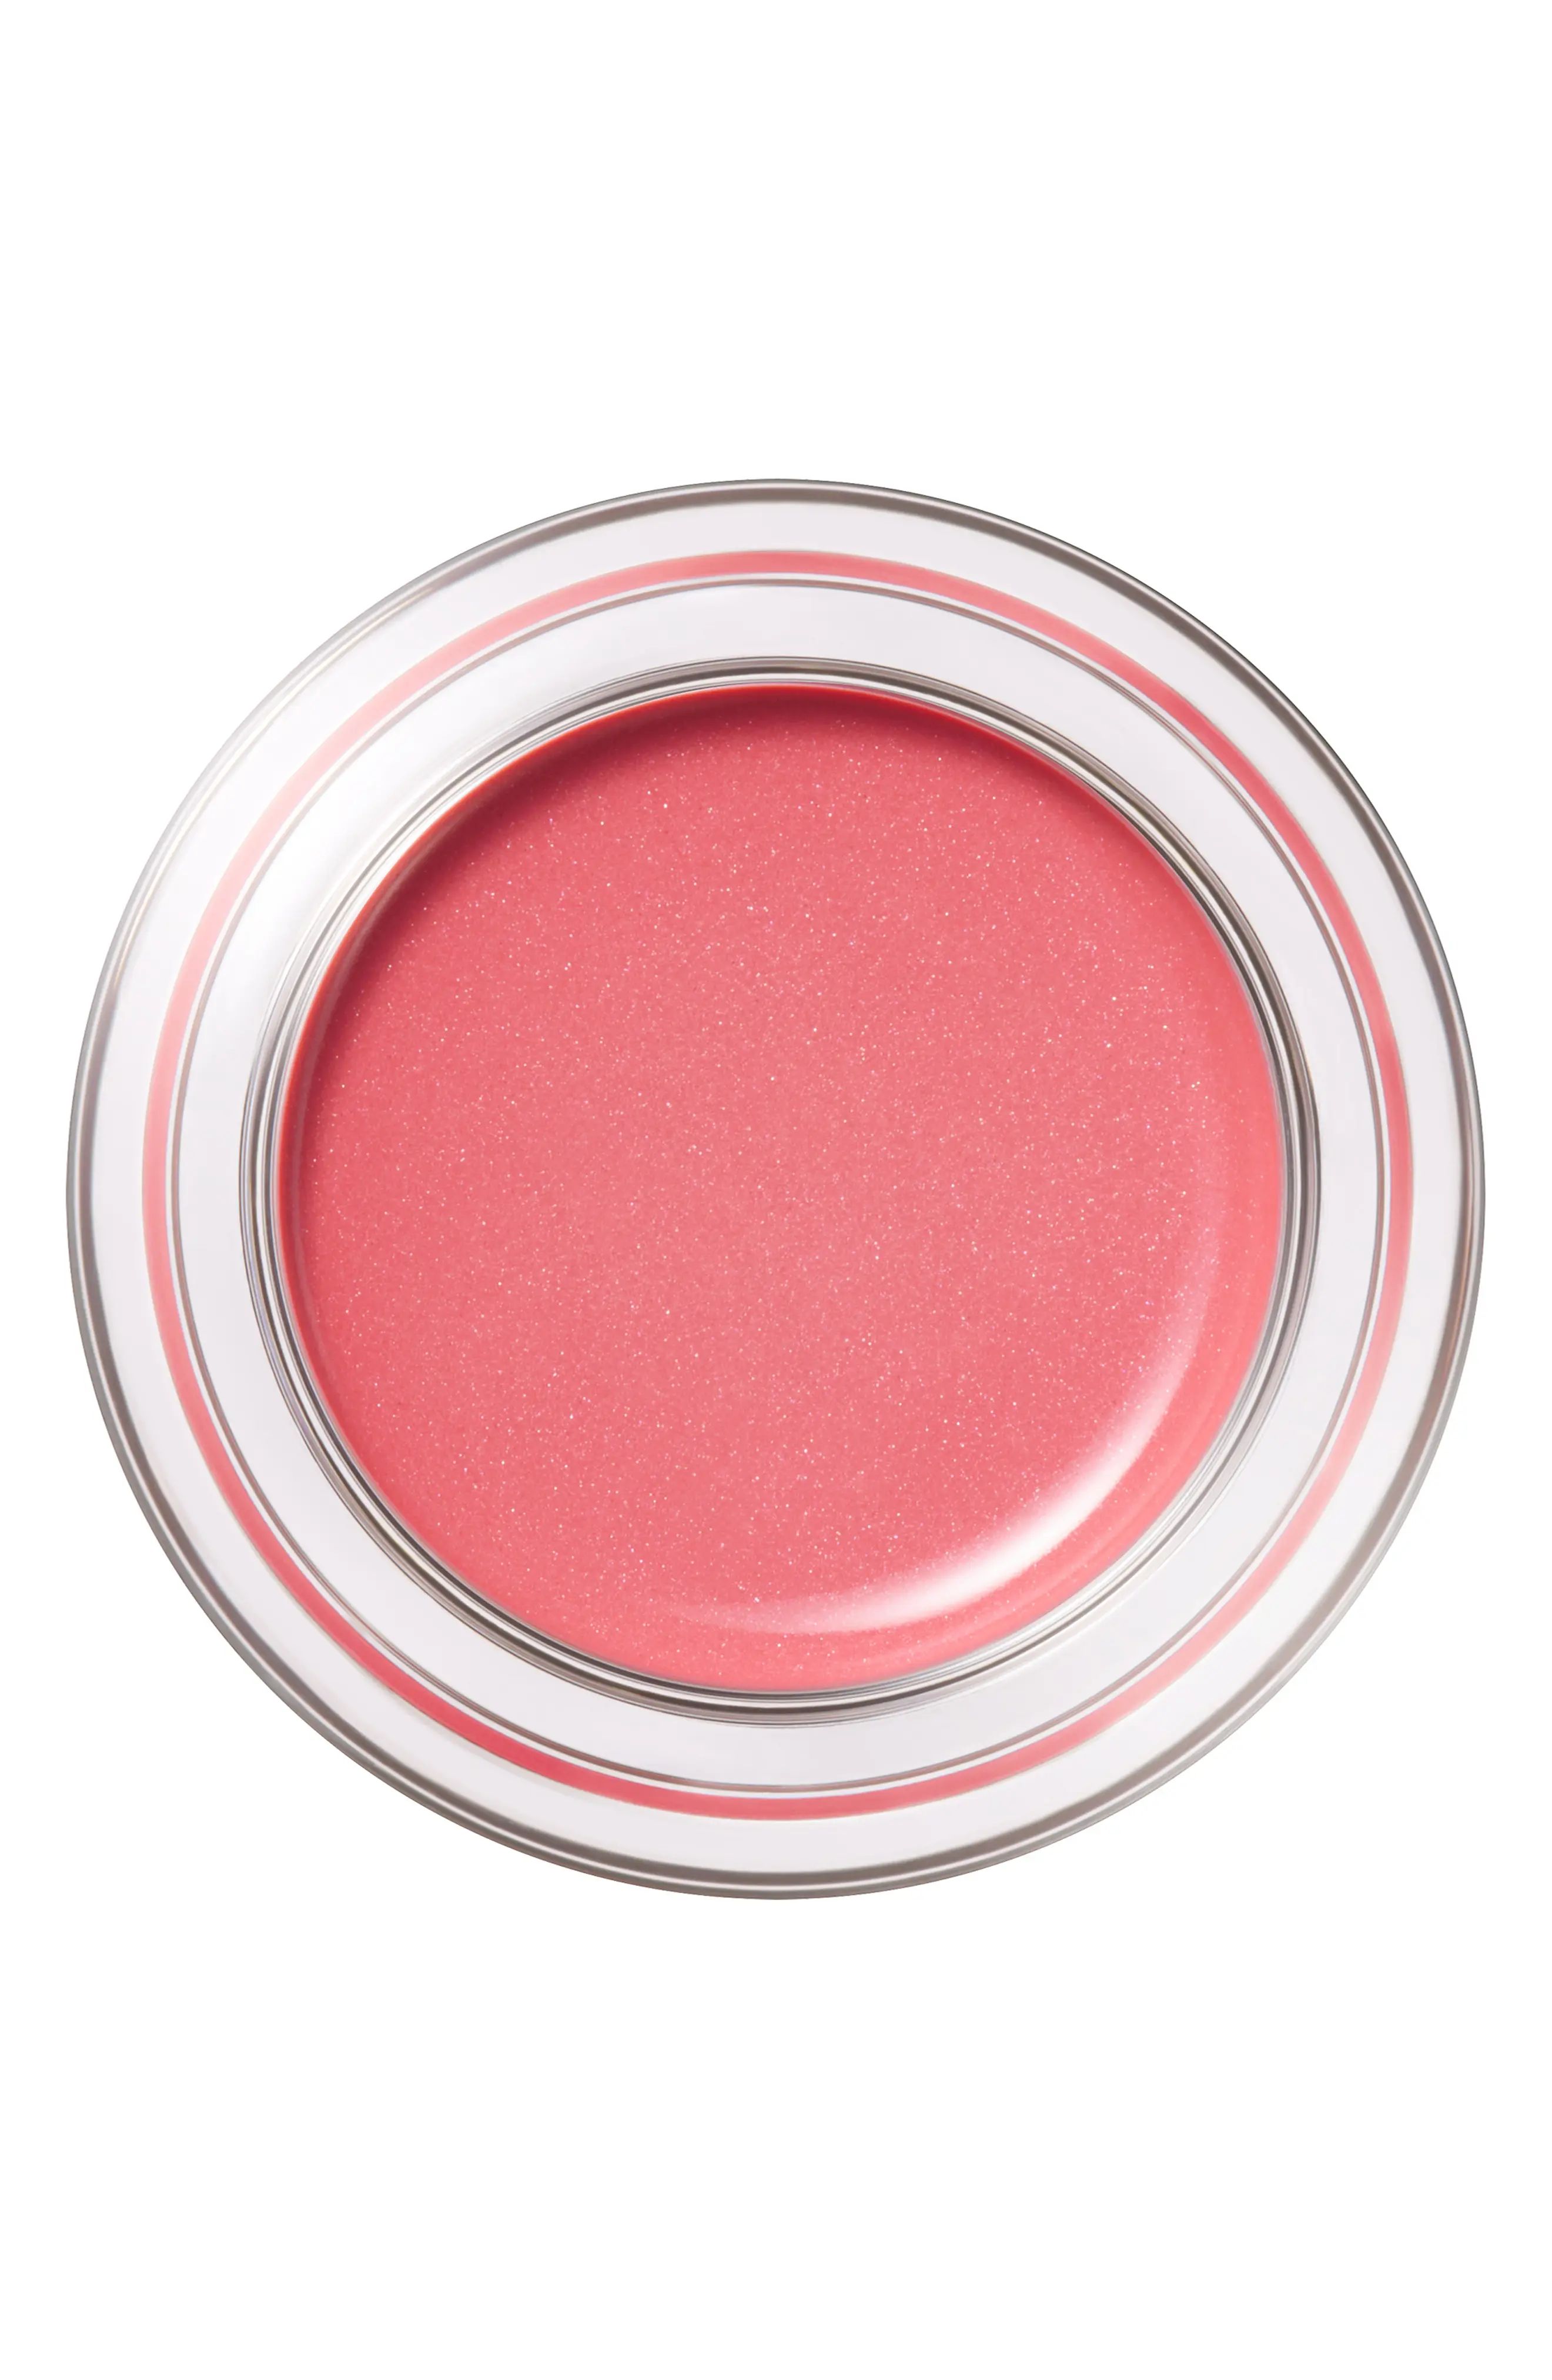 Cle de Peau Beaute Cream Blush in 202 Joyful Pink at Nordstrom | Nordstrom